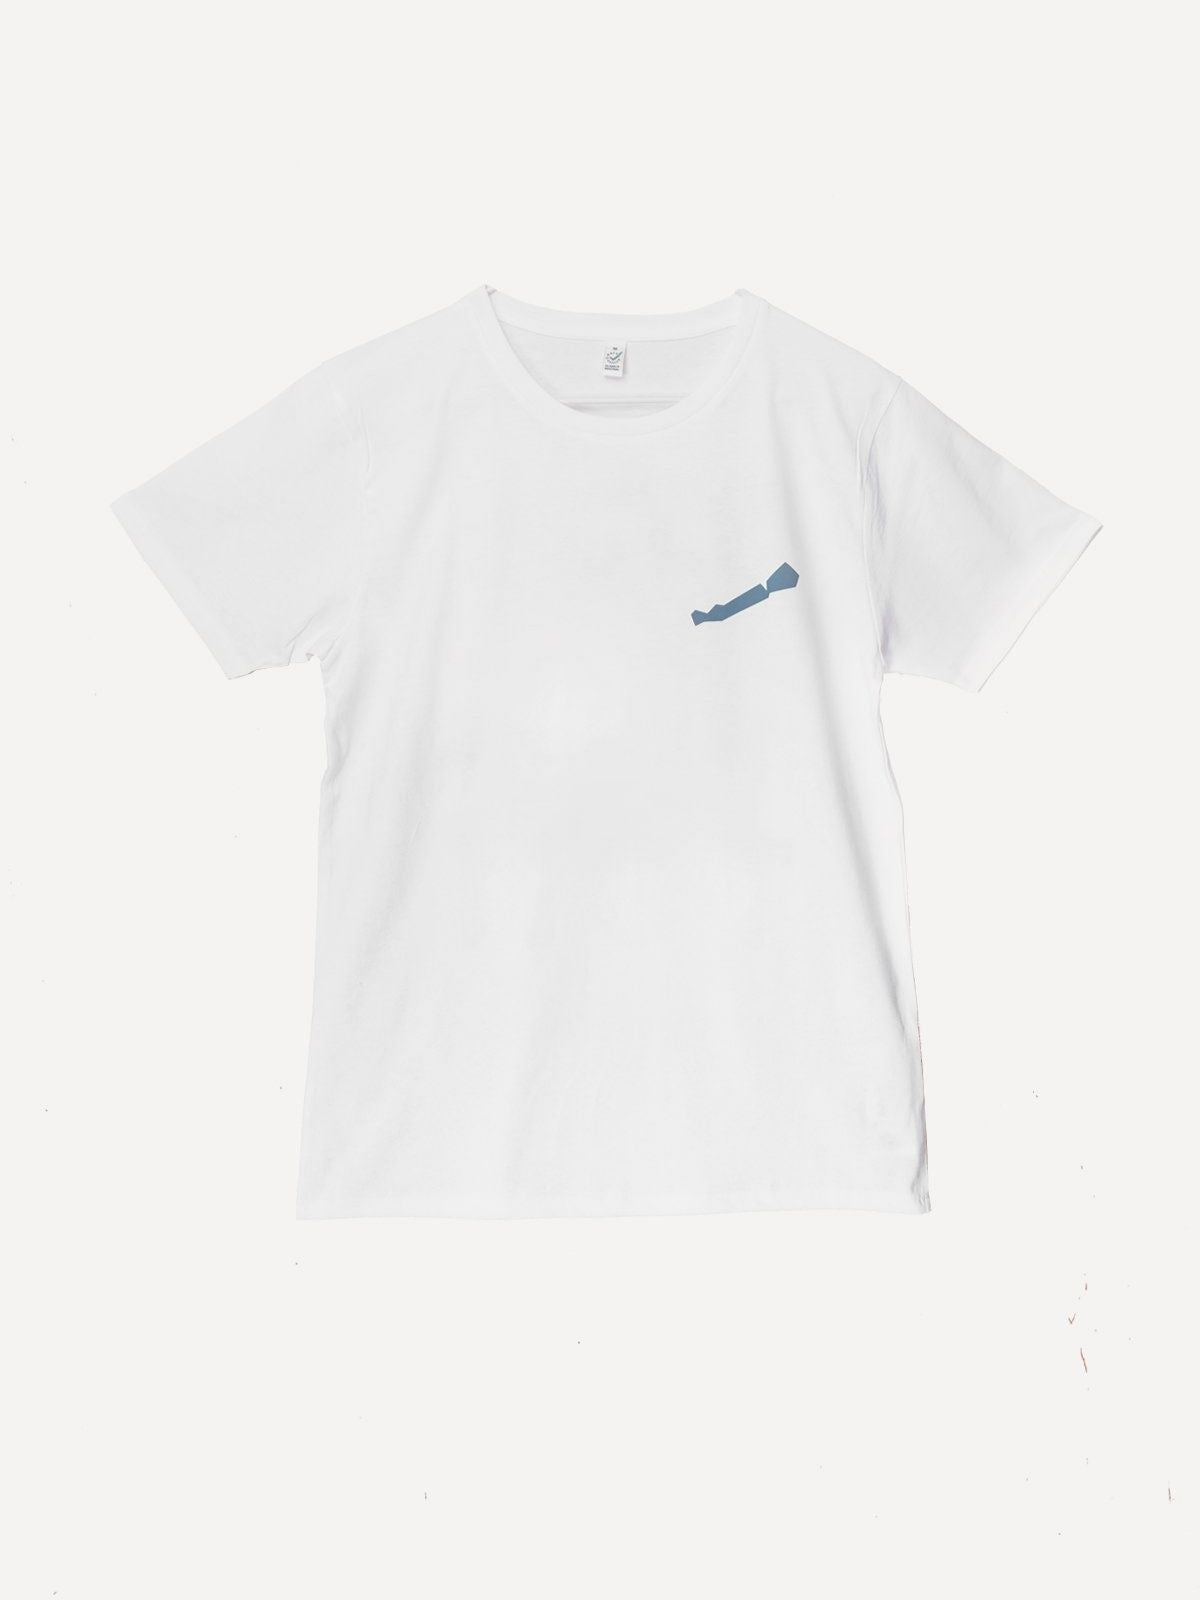 White men's t-shirt with Balaton pattern